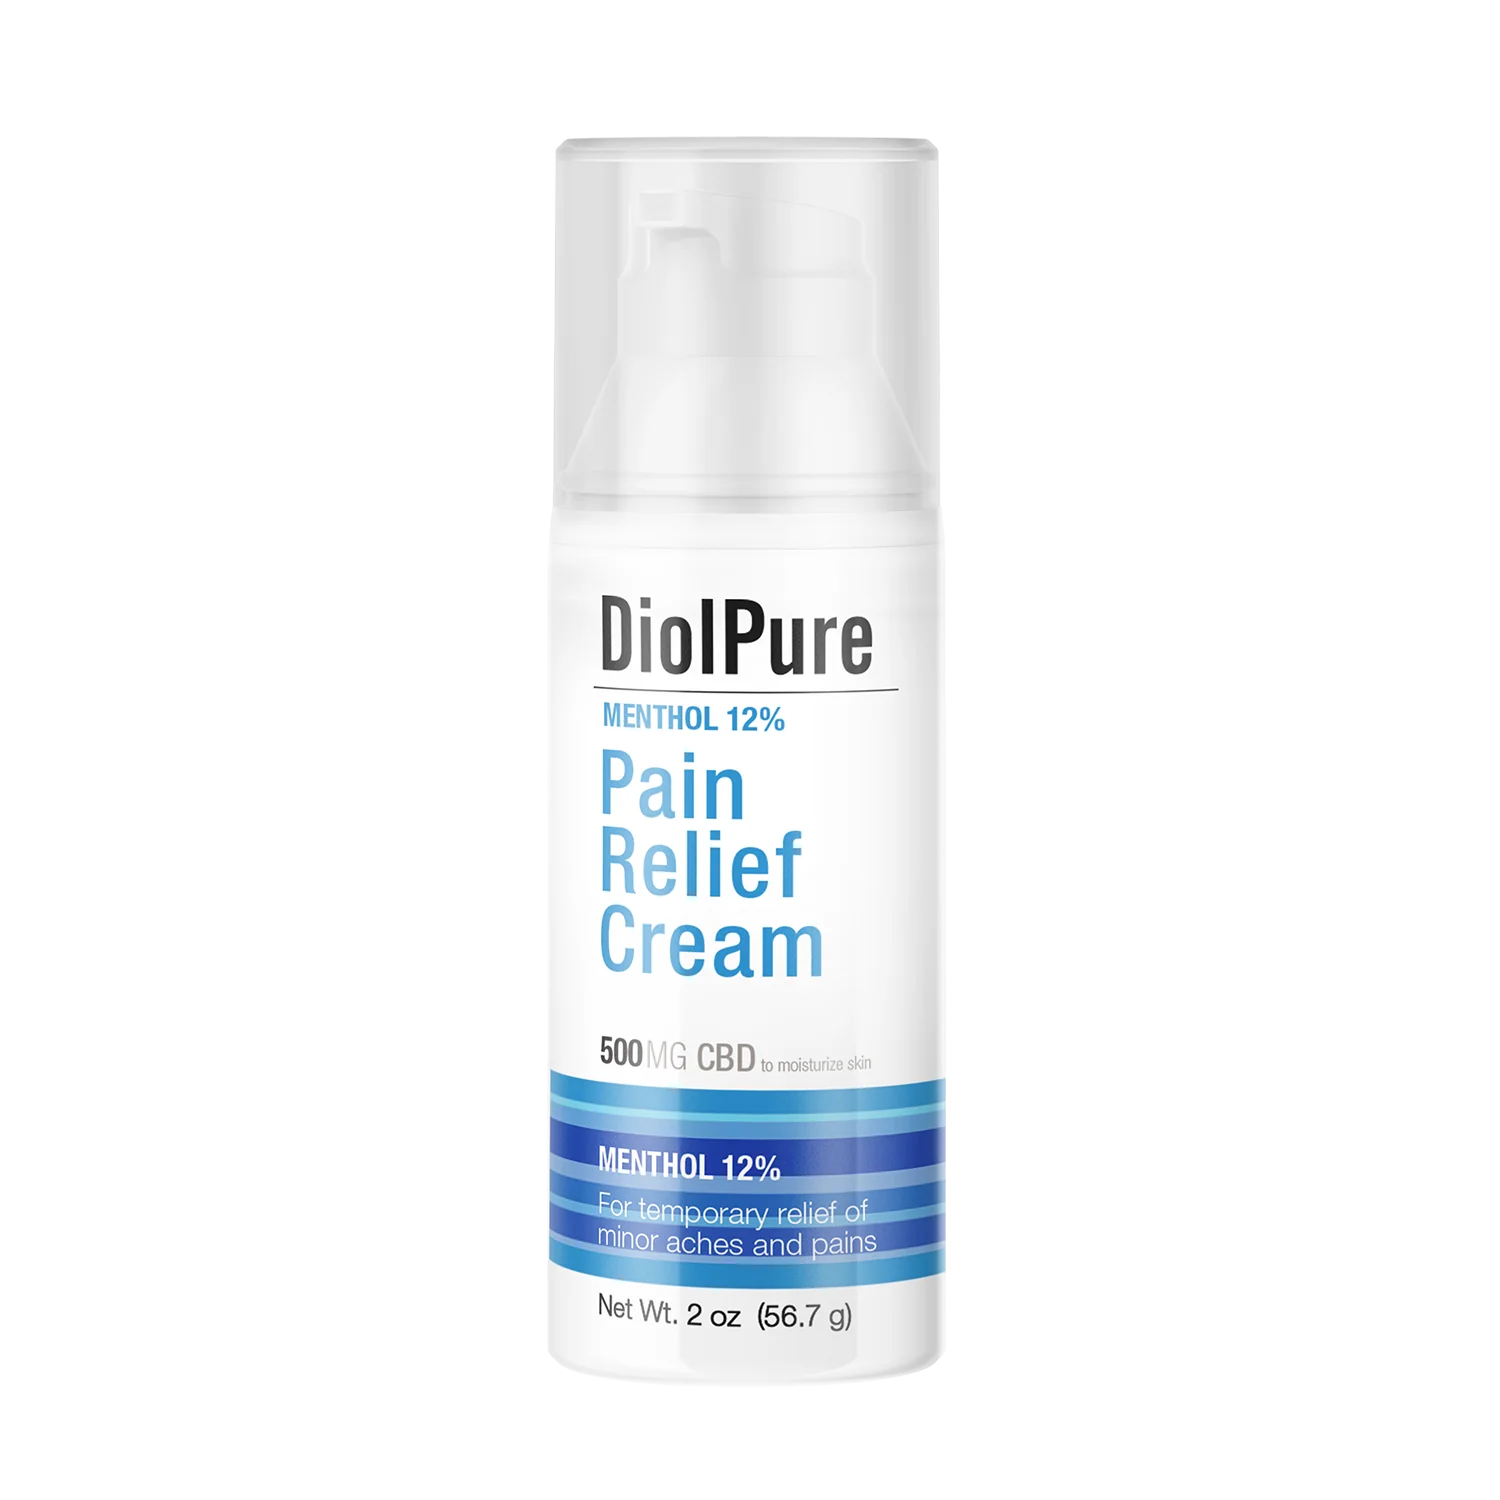 DiolPure Organic Menthol CBD Pain Relief Cream